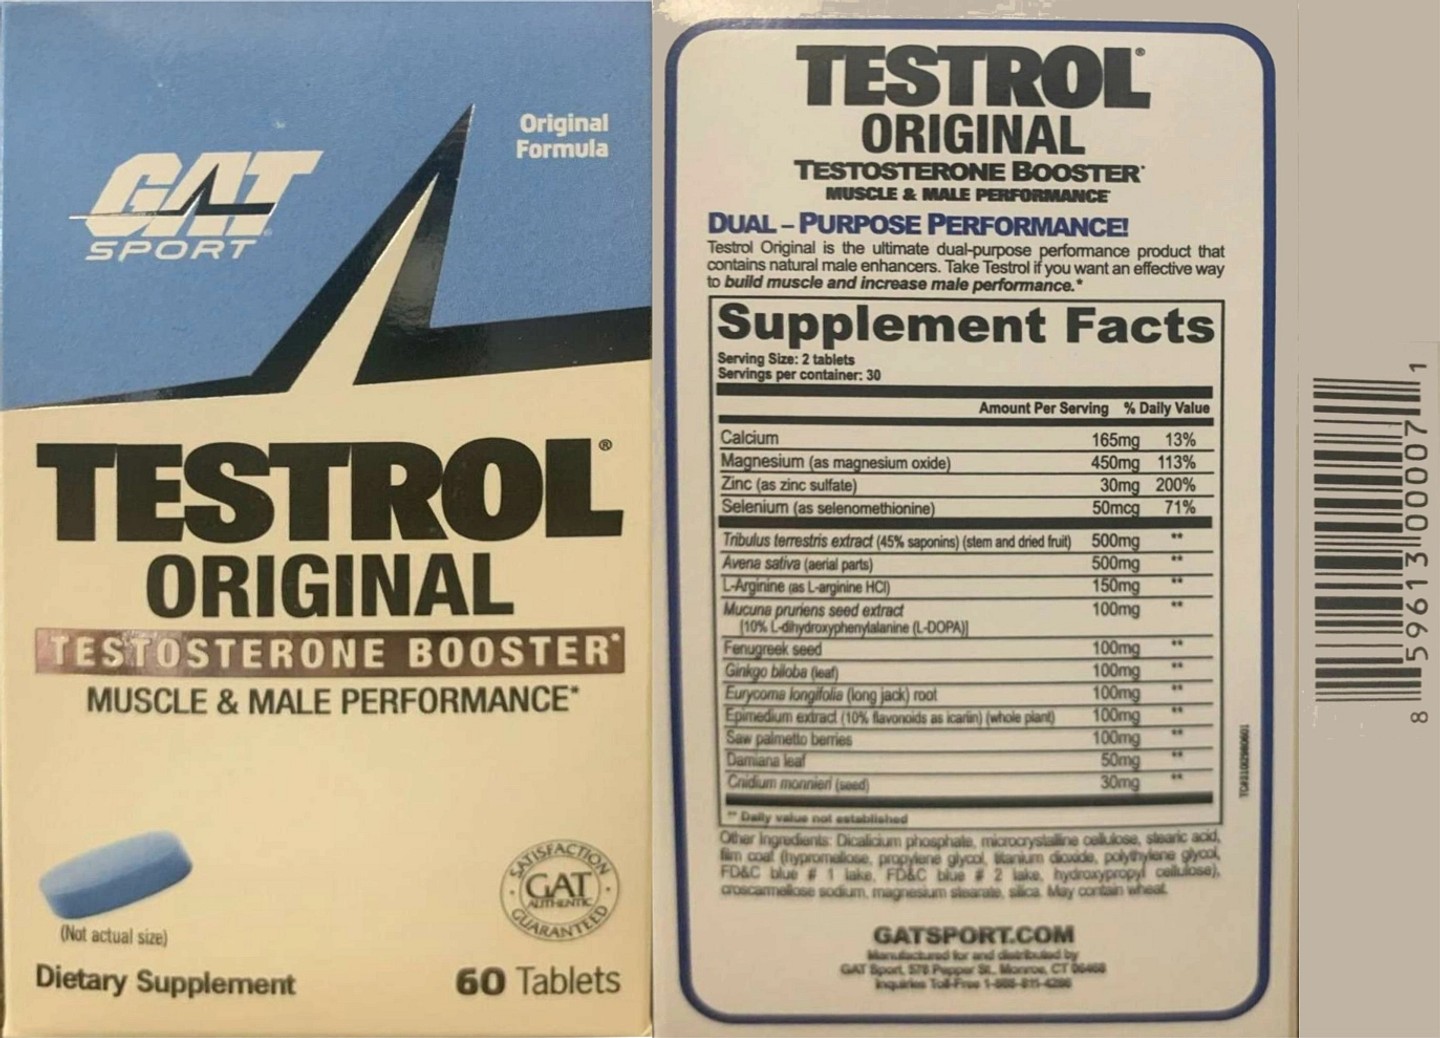 GAT, Testrol Original, Testosterone Booster label